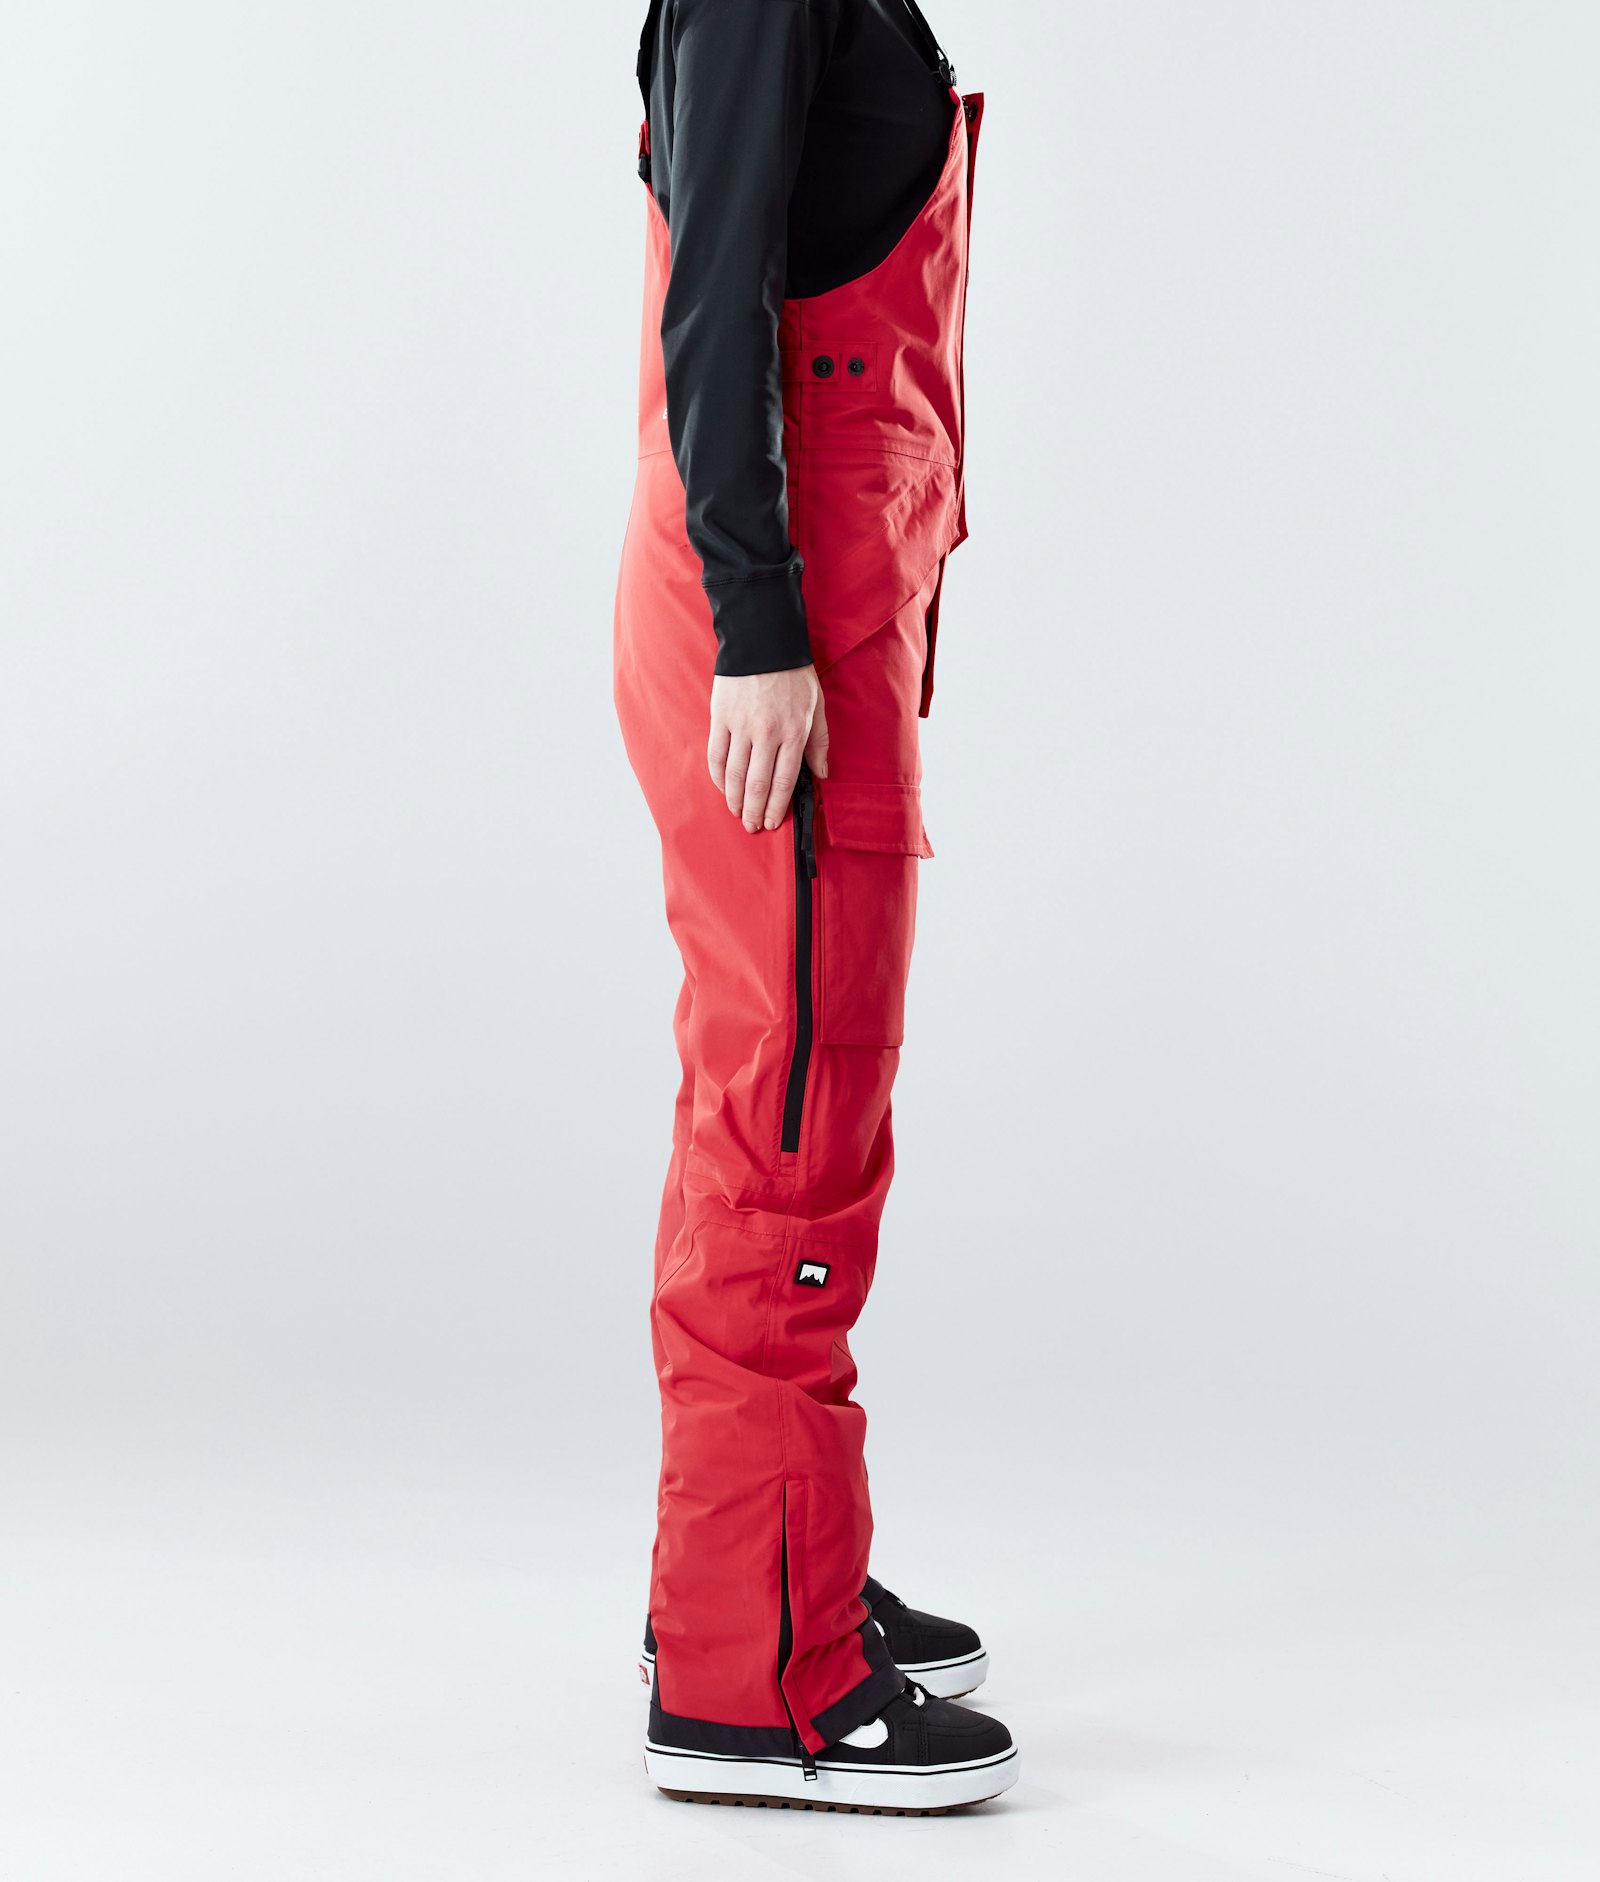 Montec Fawk W 2020 Snowboardhose Damen Red